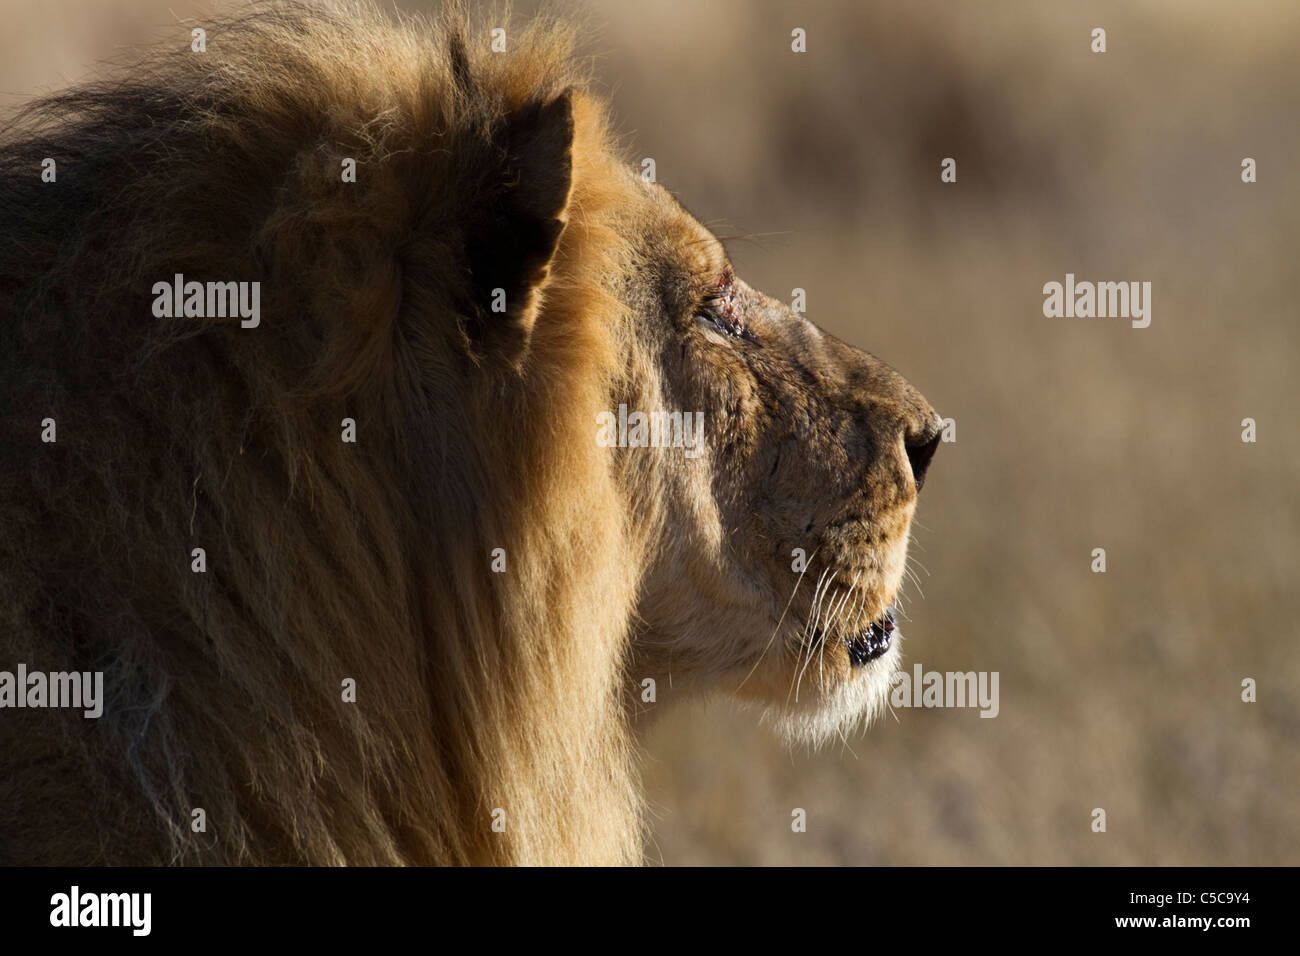 Male lion in Central Kalahari Stock Photo